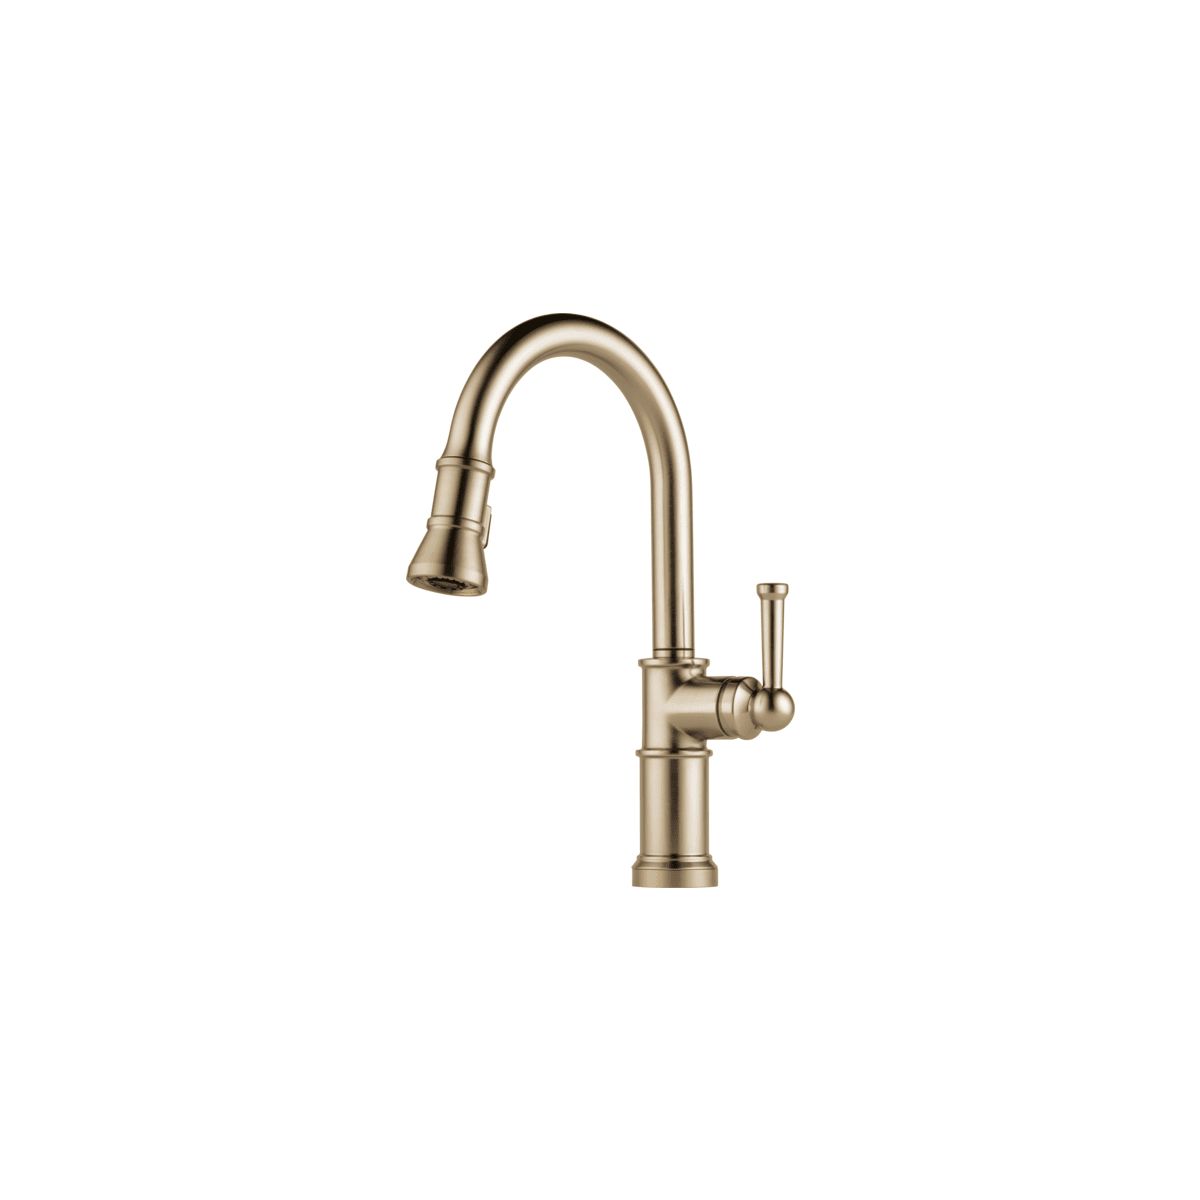 Artesso 1.8 GPM Single Hole Pull Down Kitchen Faucet - Limited Lifetime Warranty | Build.com, Inc.